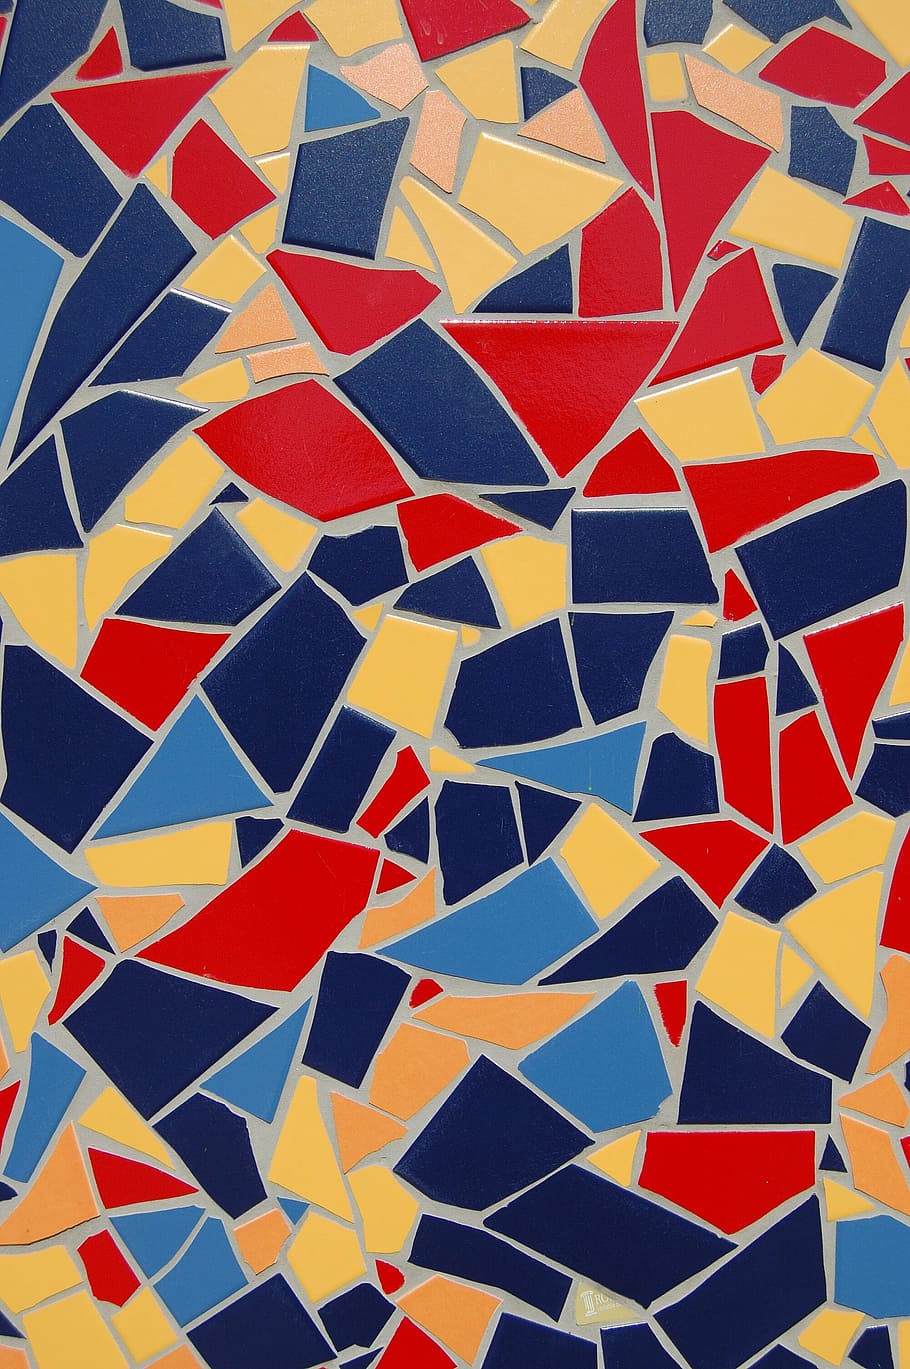 multicolored, ceramic, tile ground, pattern, tile, wall, background, decorative, blue, design